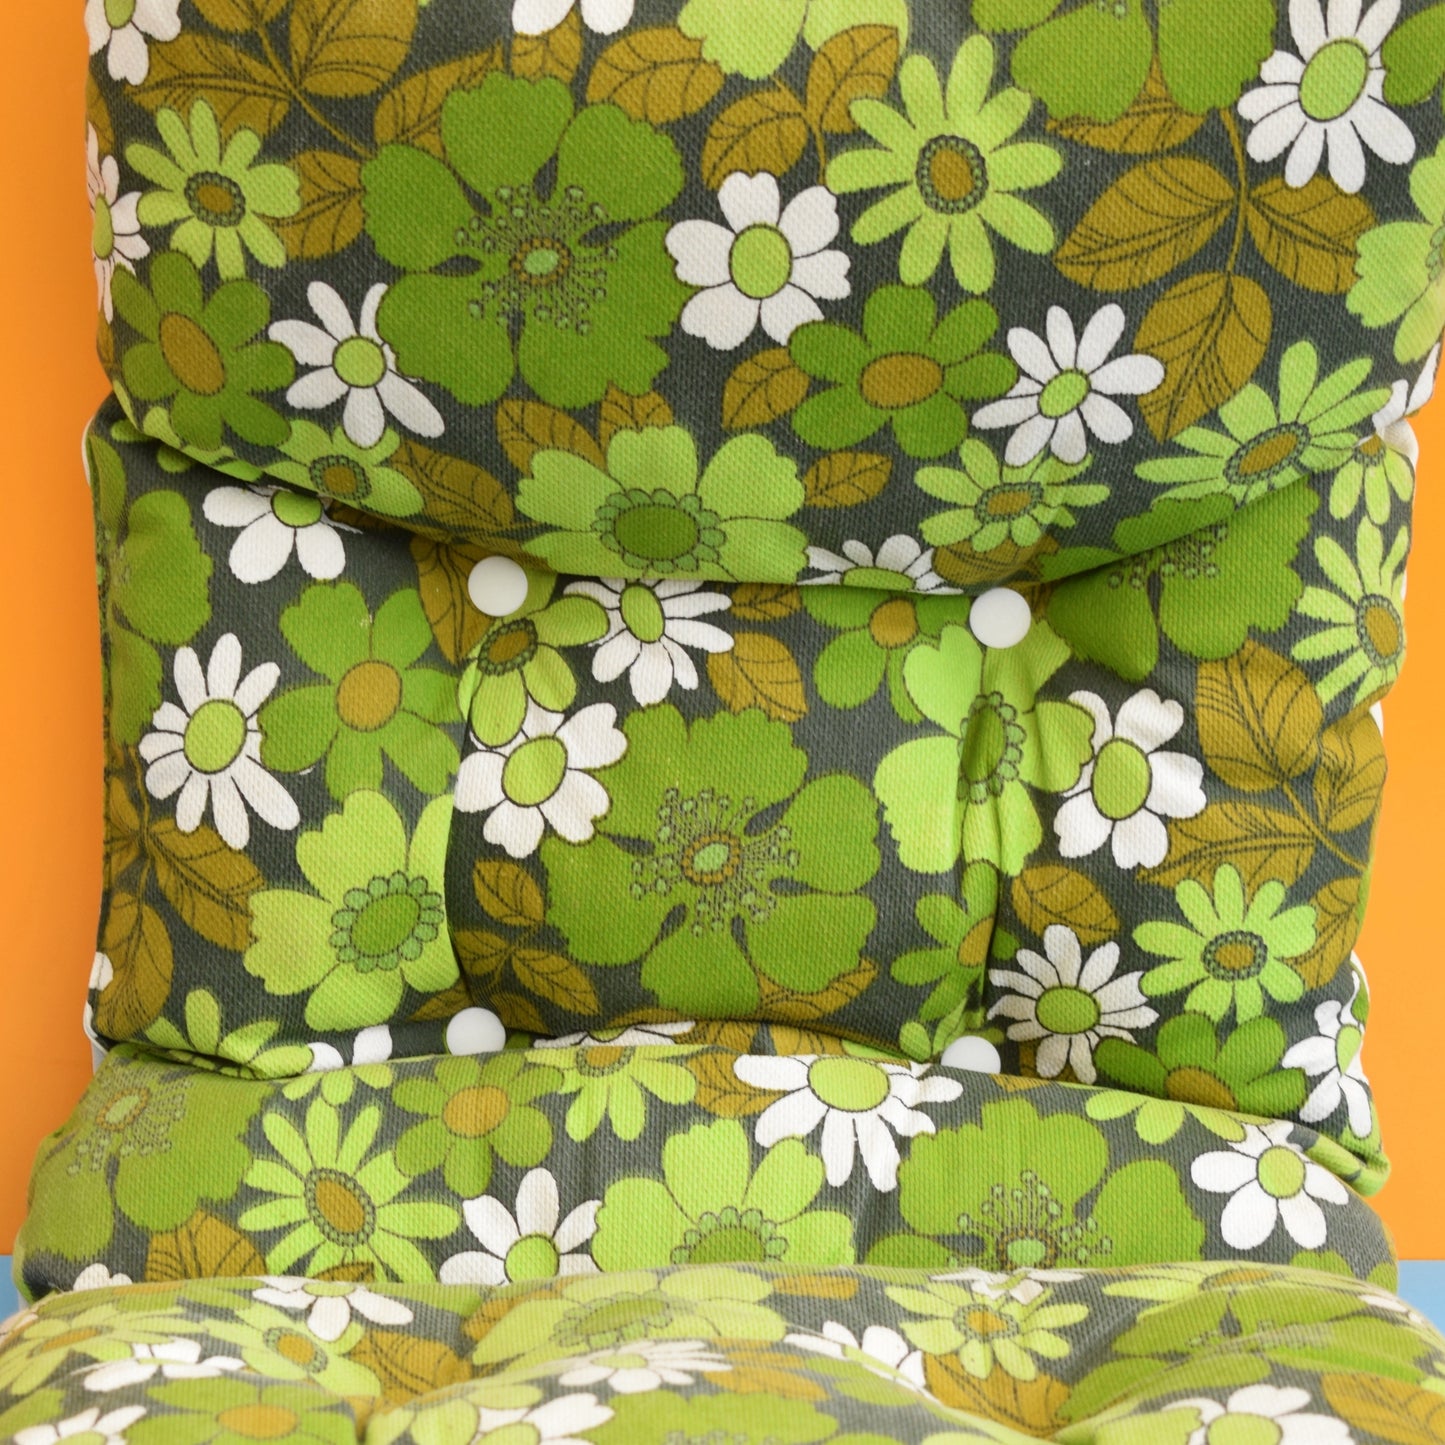 Vintage 1960s Padded Garden Cushion Flower Power - Green